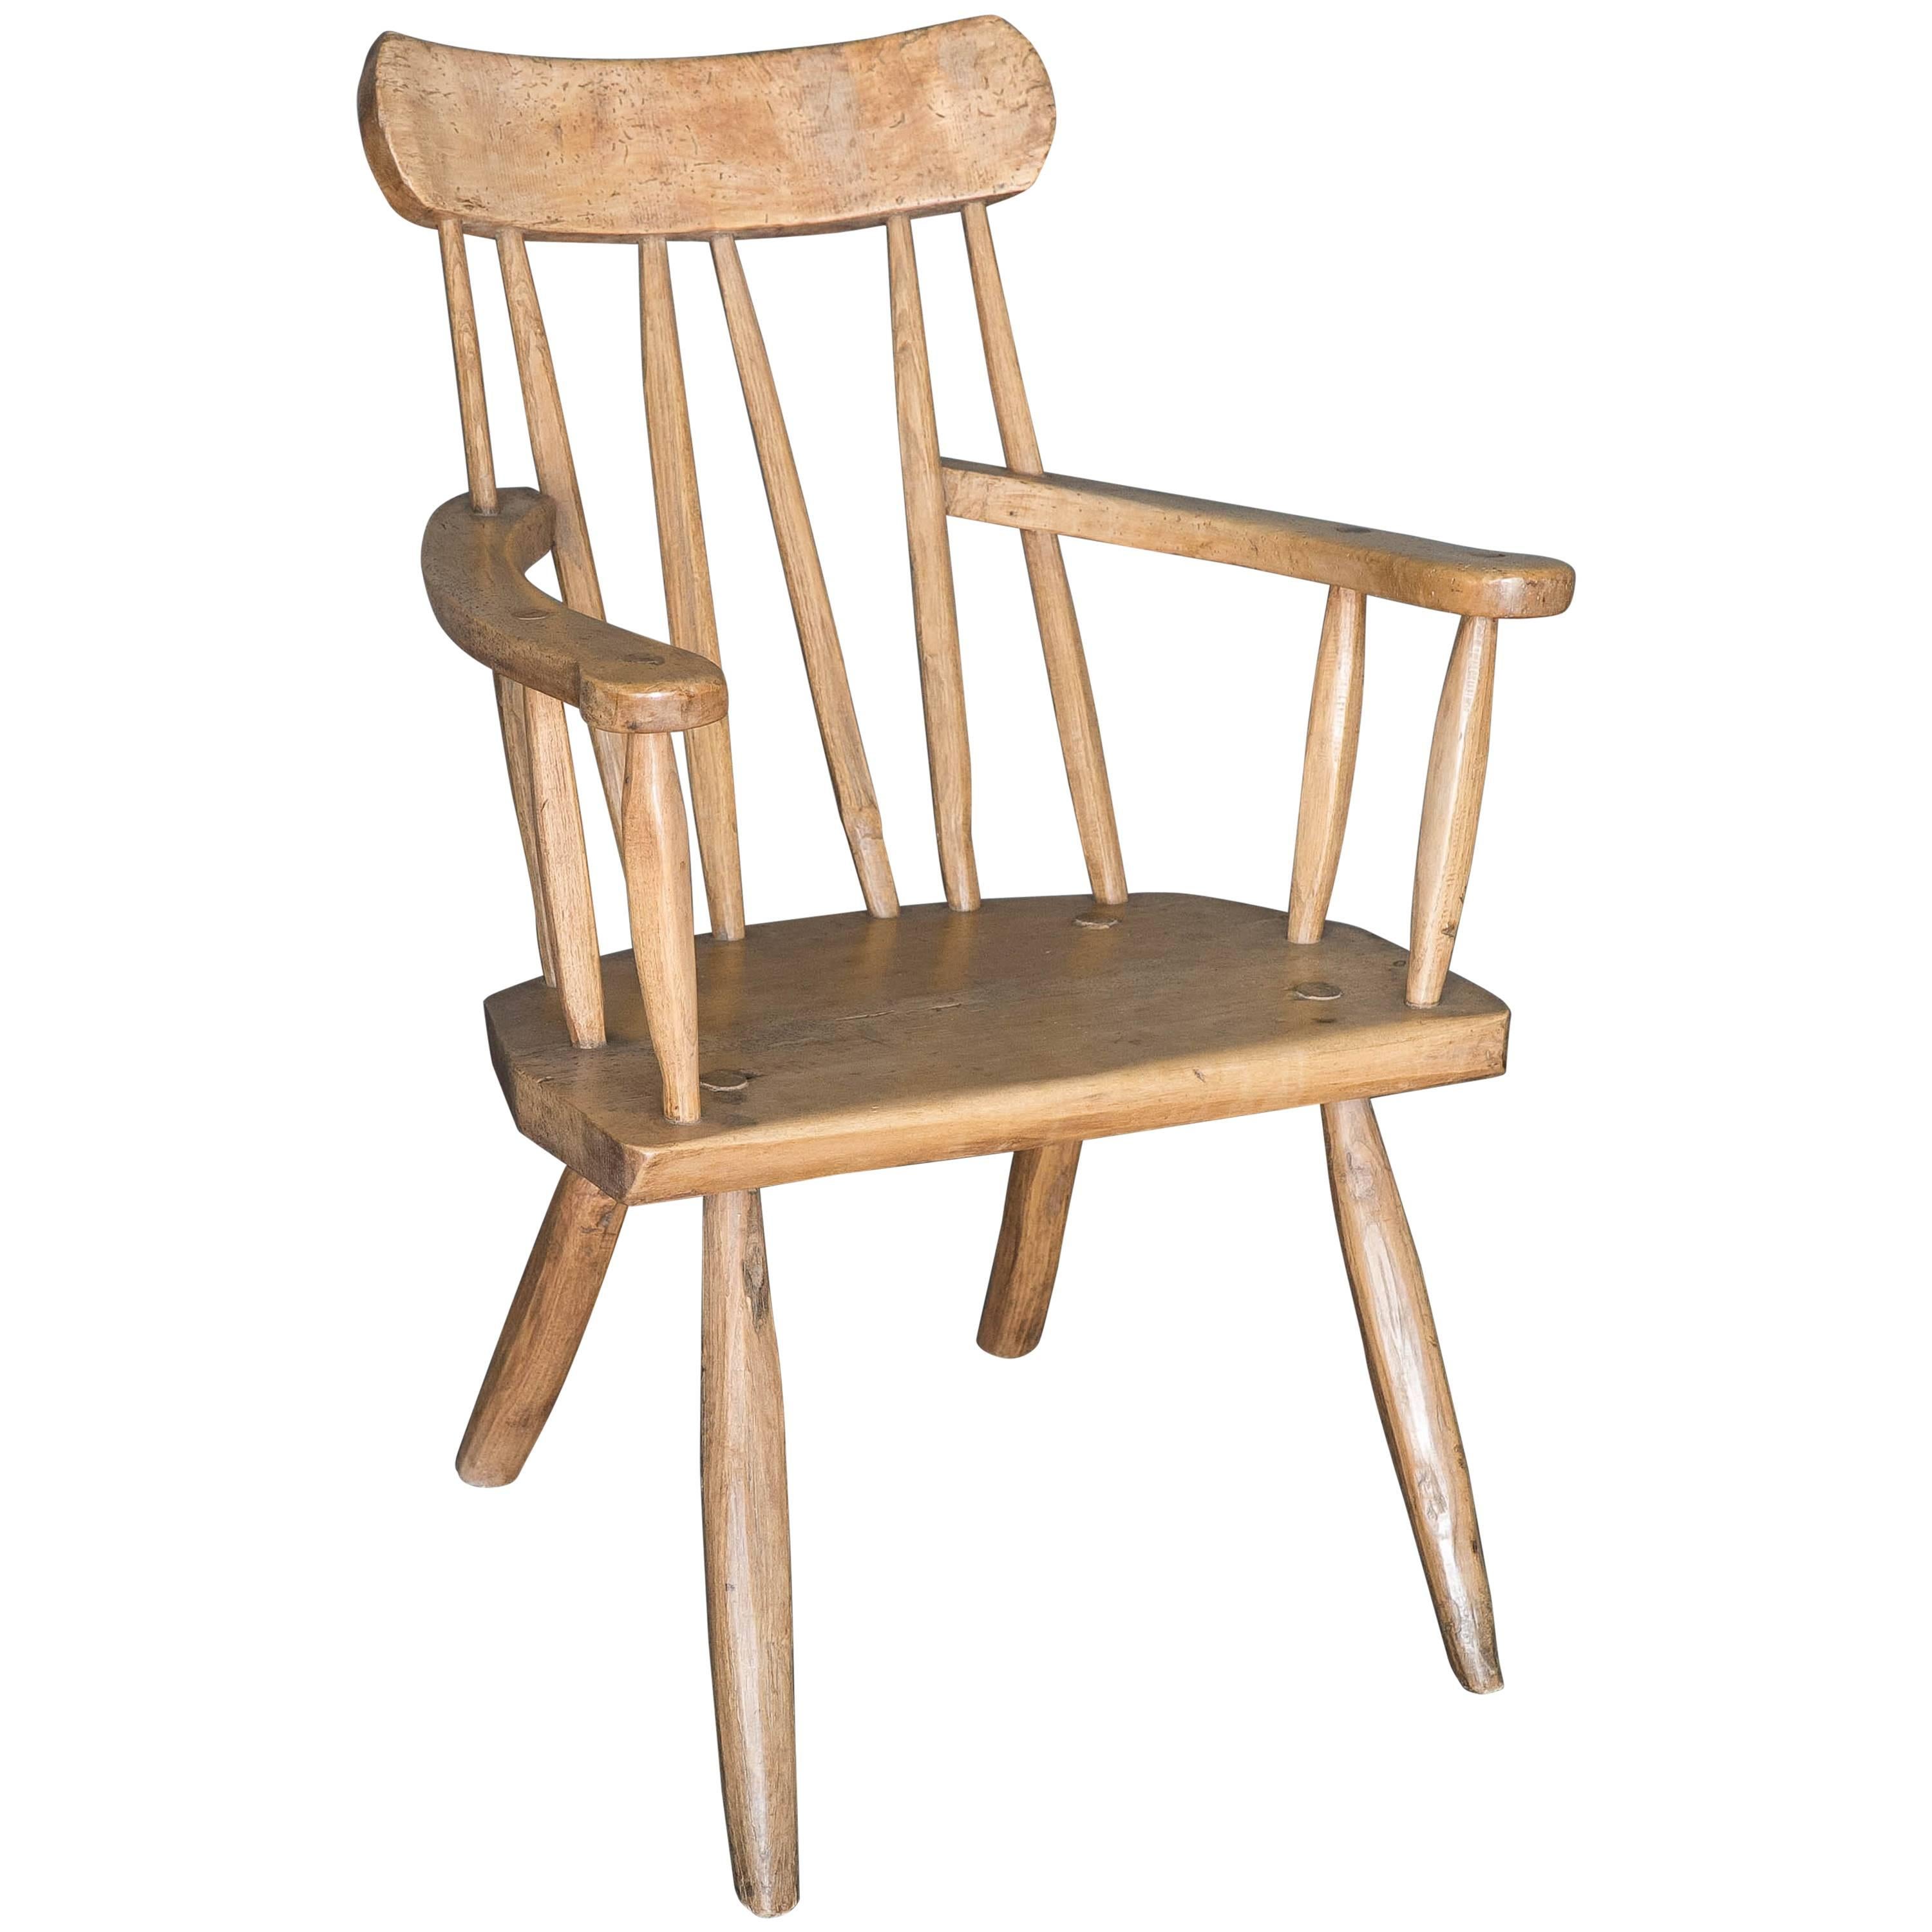 Antique 19th Century English Primitive Welsh Folk Art Stick Chair For Sale